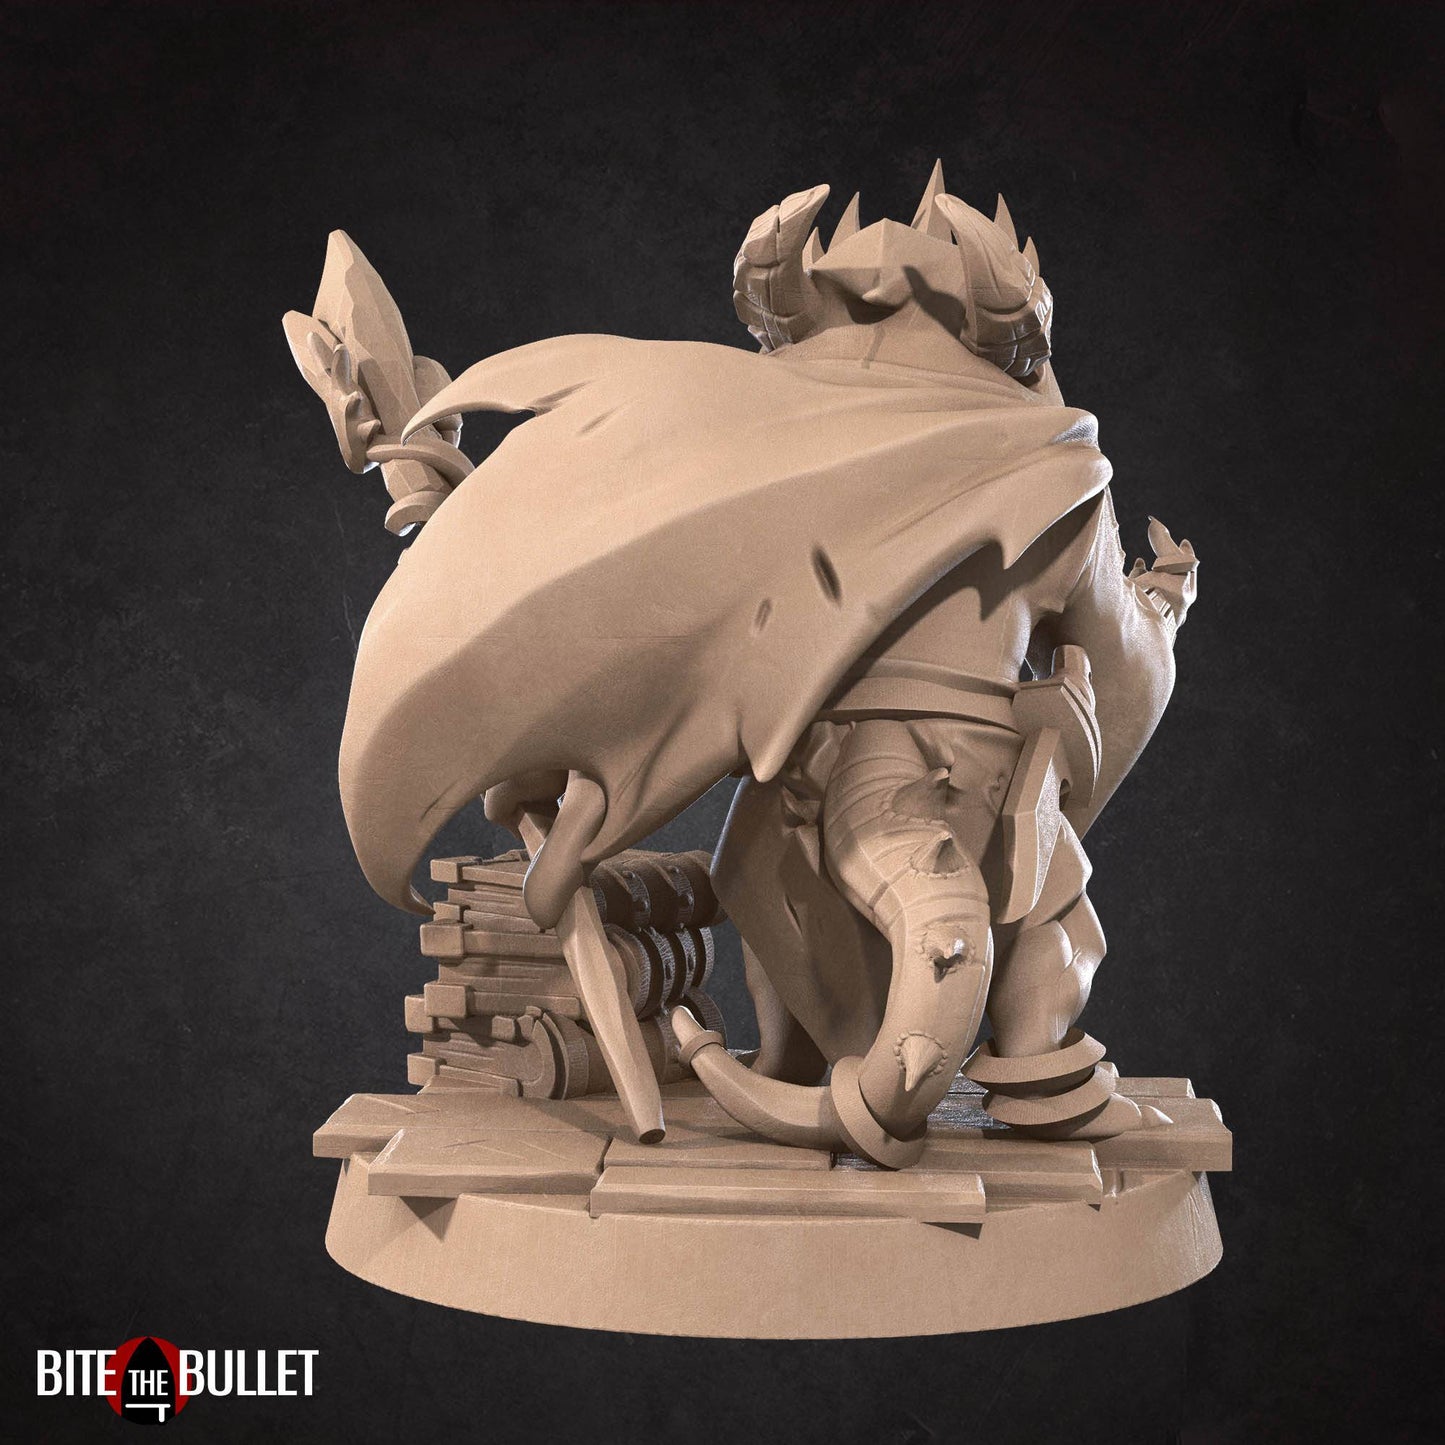 Kobold Warlock Lizardfolk | D&D Miniature TTRPG Character | Bite the Bullet - Tattles Told 3D